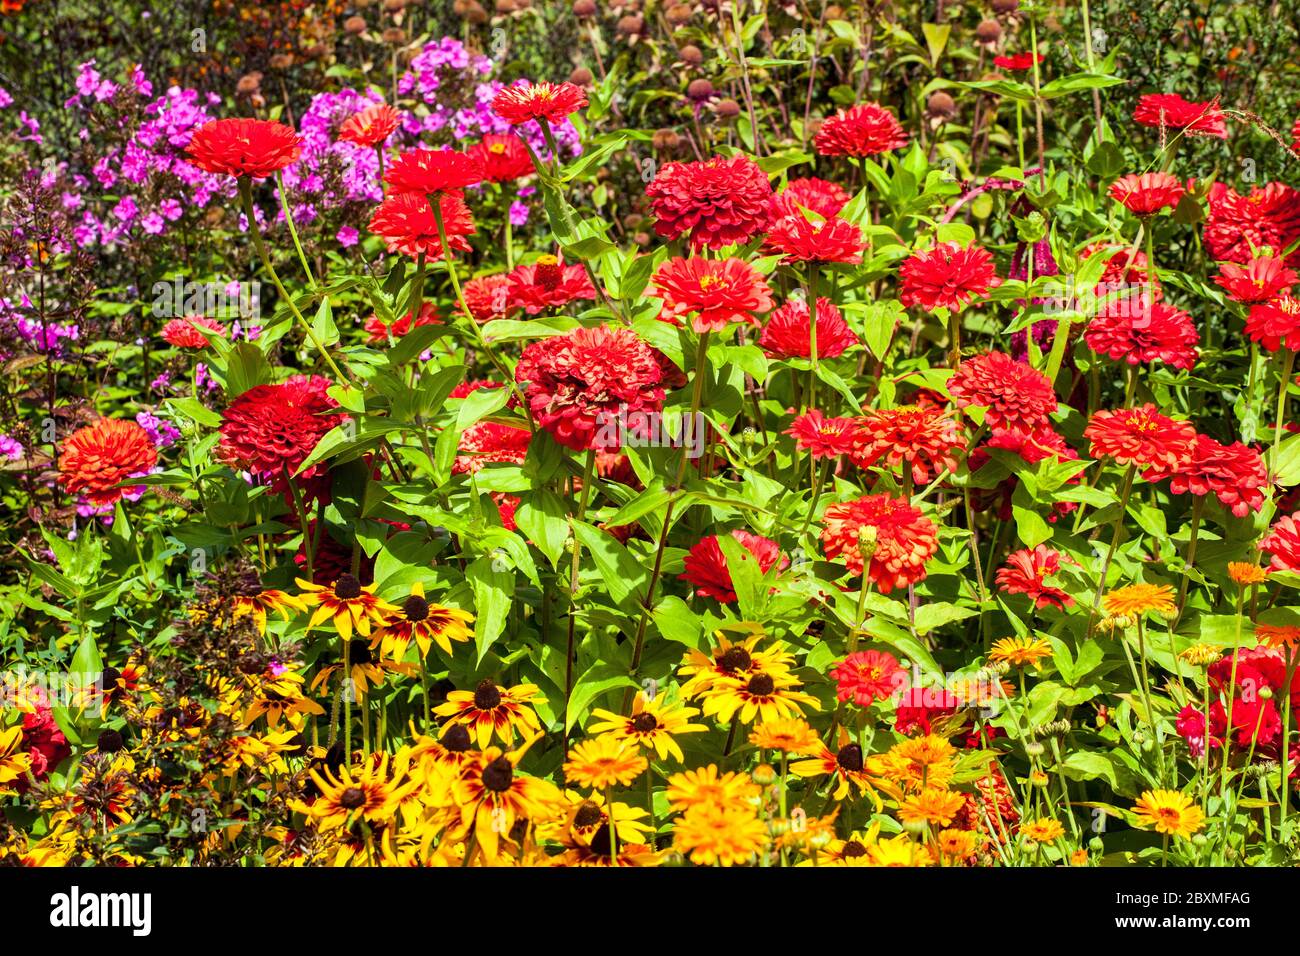 Garden in full bloom Zinnias Rudbeckia Phlox Zinnias in Garden Stock Photo